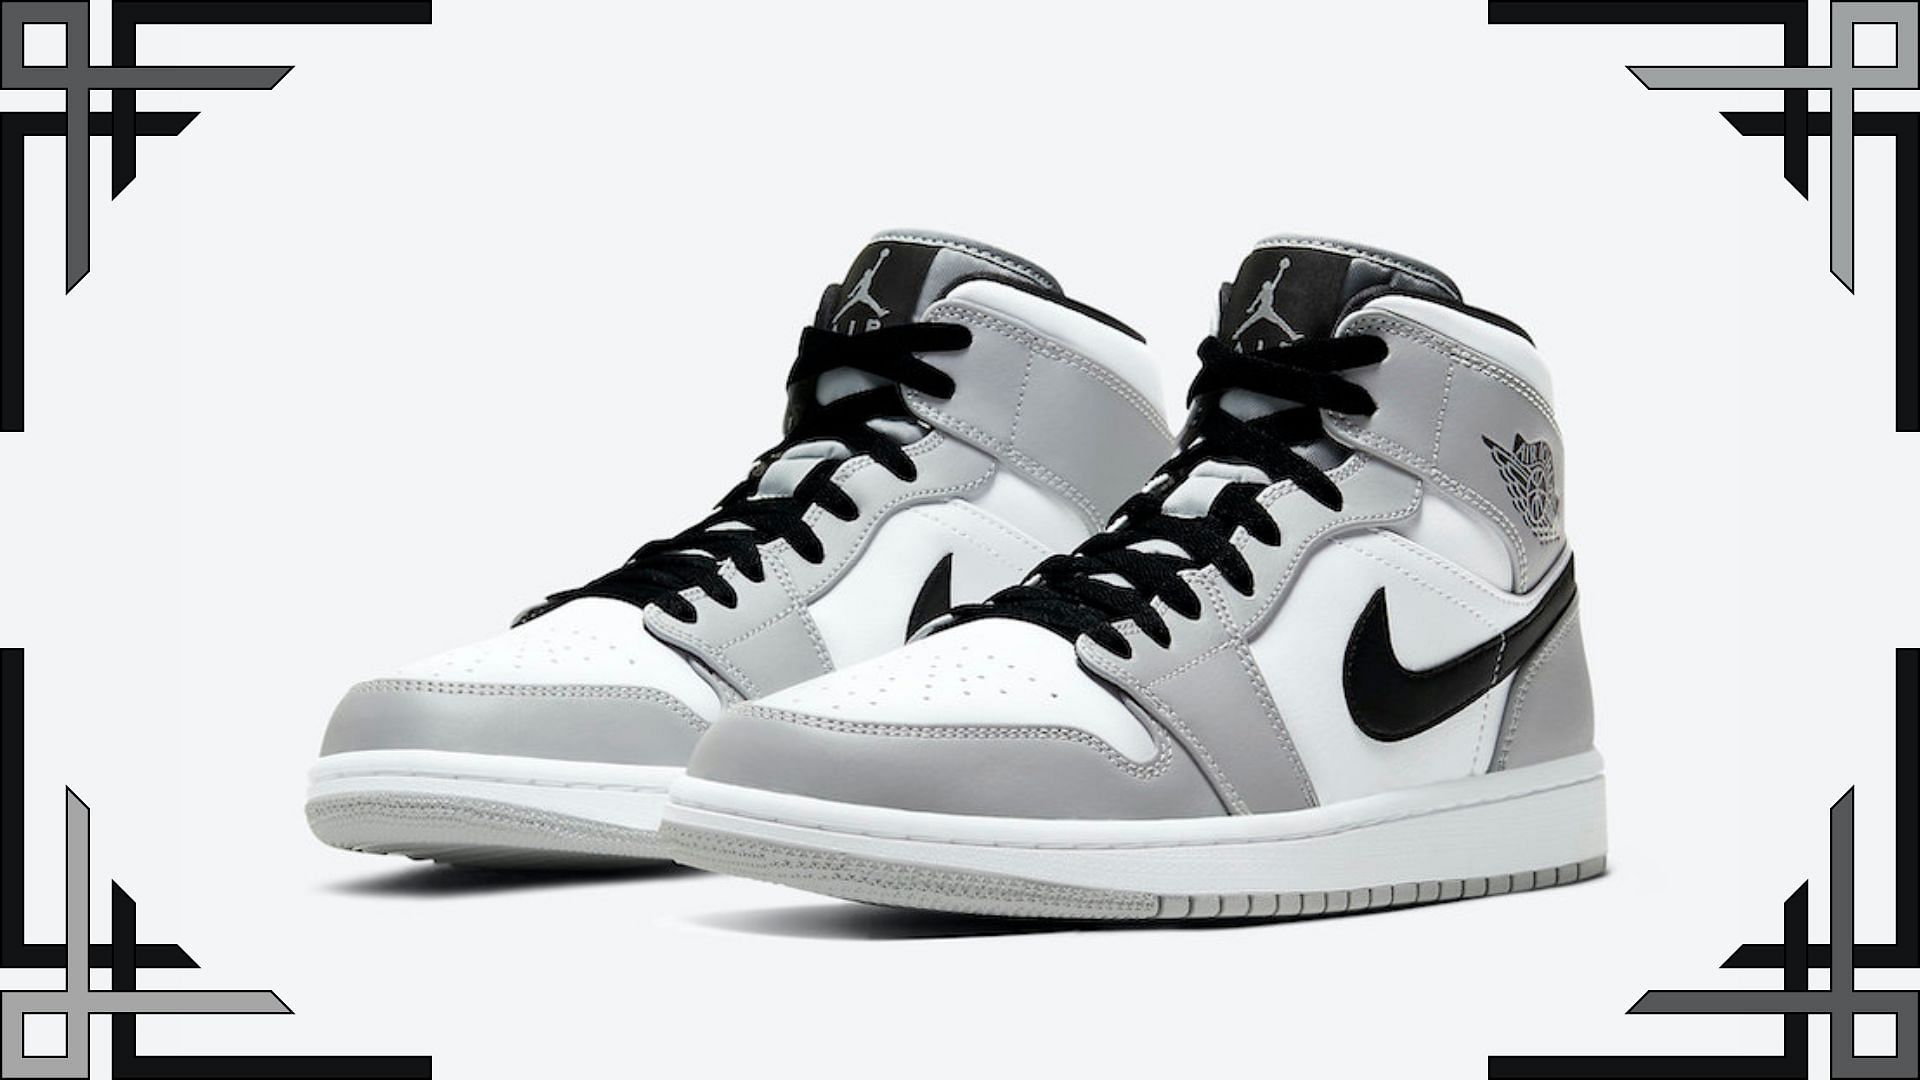 Air Jordan 1 Mid Light Smoke Grey shoes (Image via Nike)